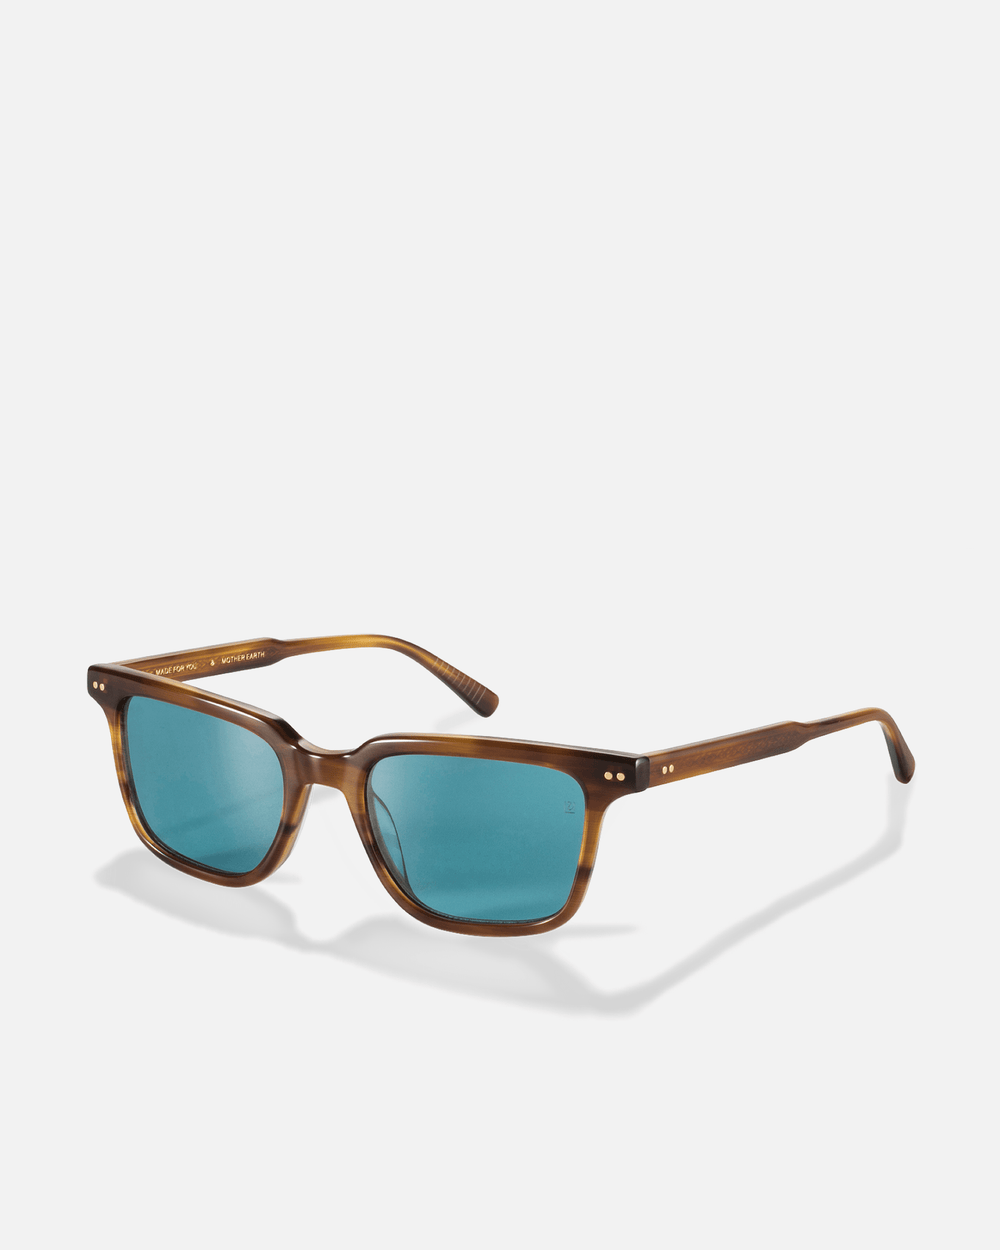 PEPINO Bio-Acetate Square Frame Sunglasses for Men & Women | Earth (Blue lens) | Sunnies Collection | OLLU